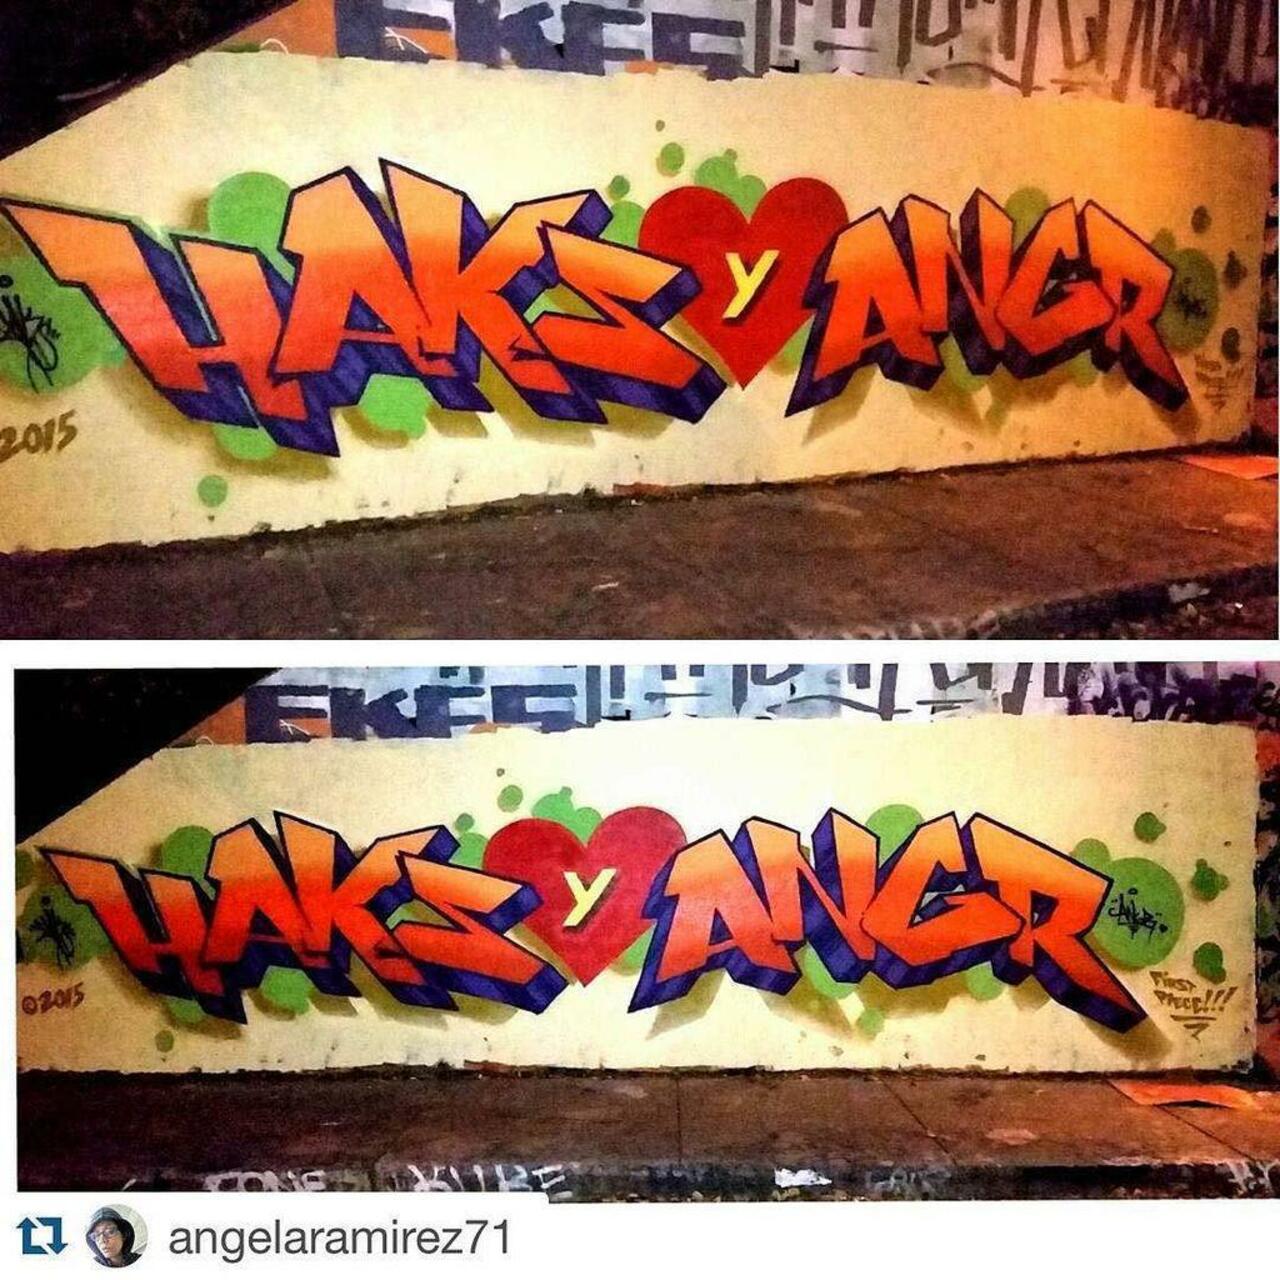 RT @artpushr: via #haks180 "http://bit.ly/1L67YMb" #graffiti #streetart http://t.co/3fVni4kYoo